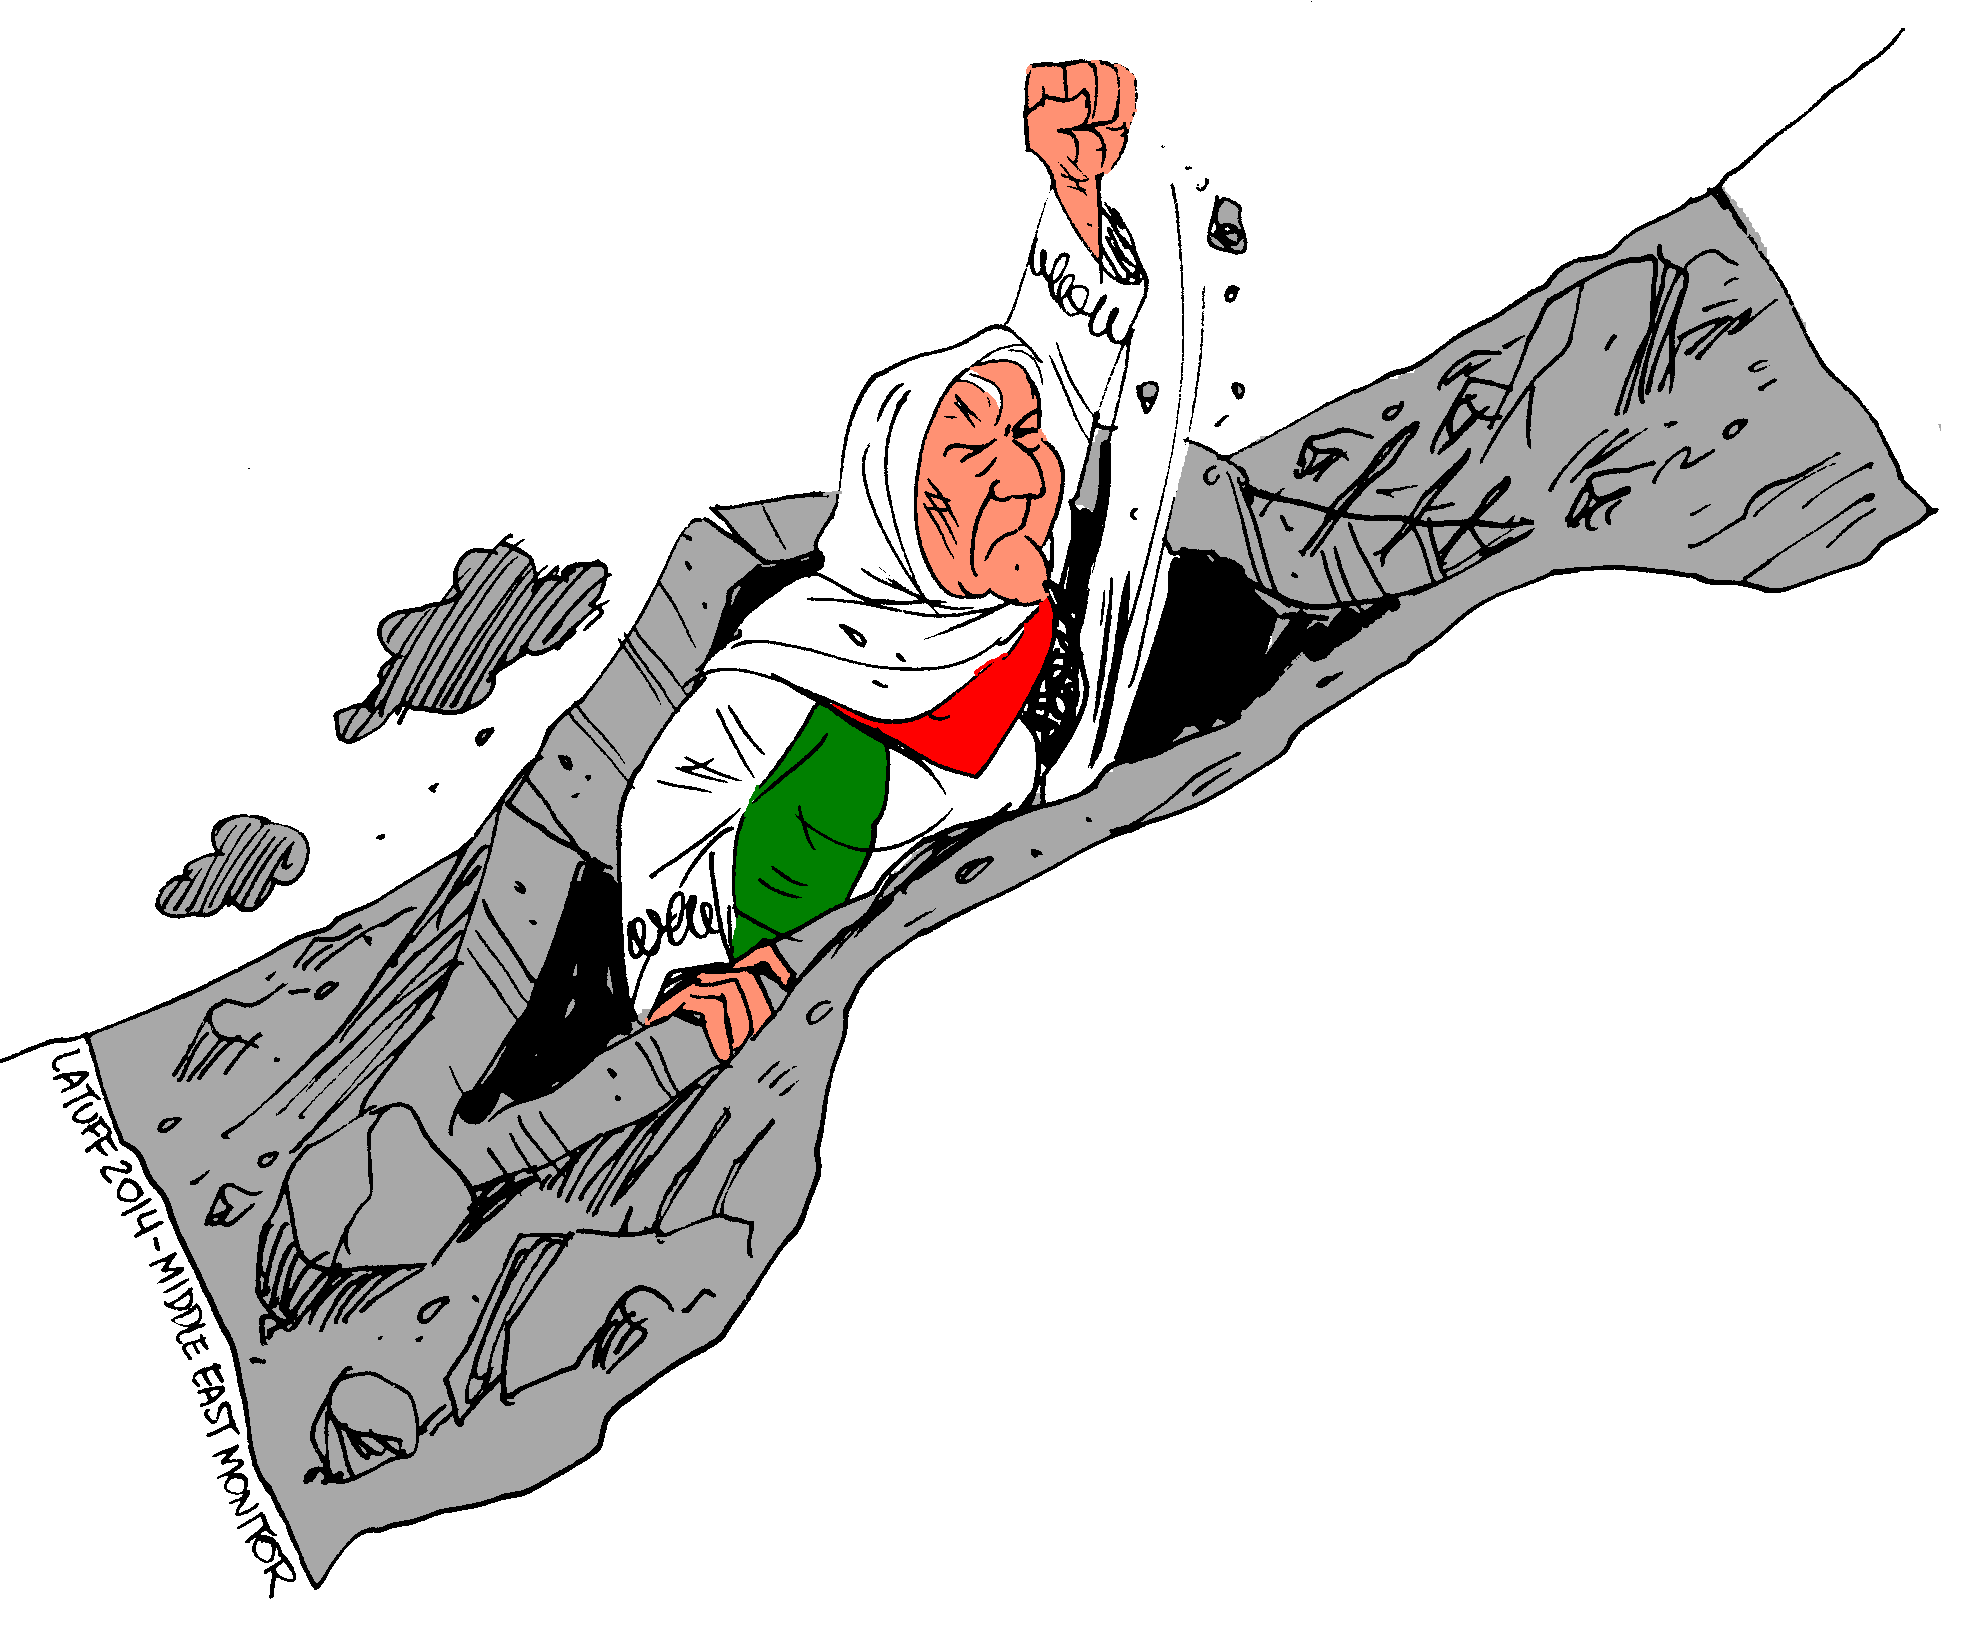 Gaza by Carlos Latuff-Brazil/best cartoon-2014